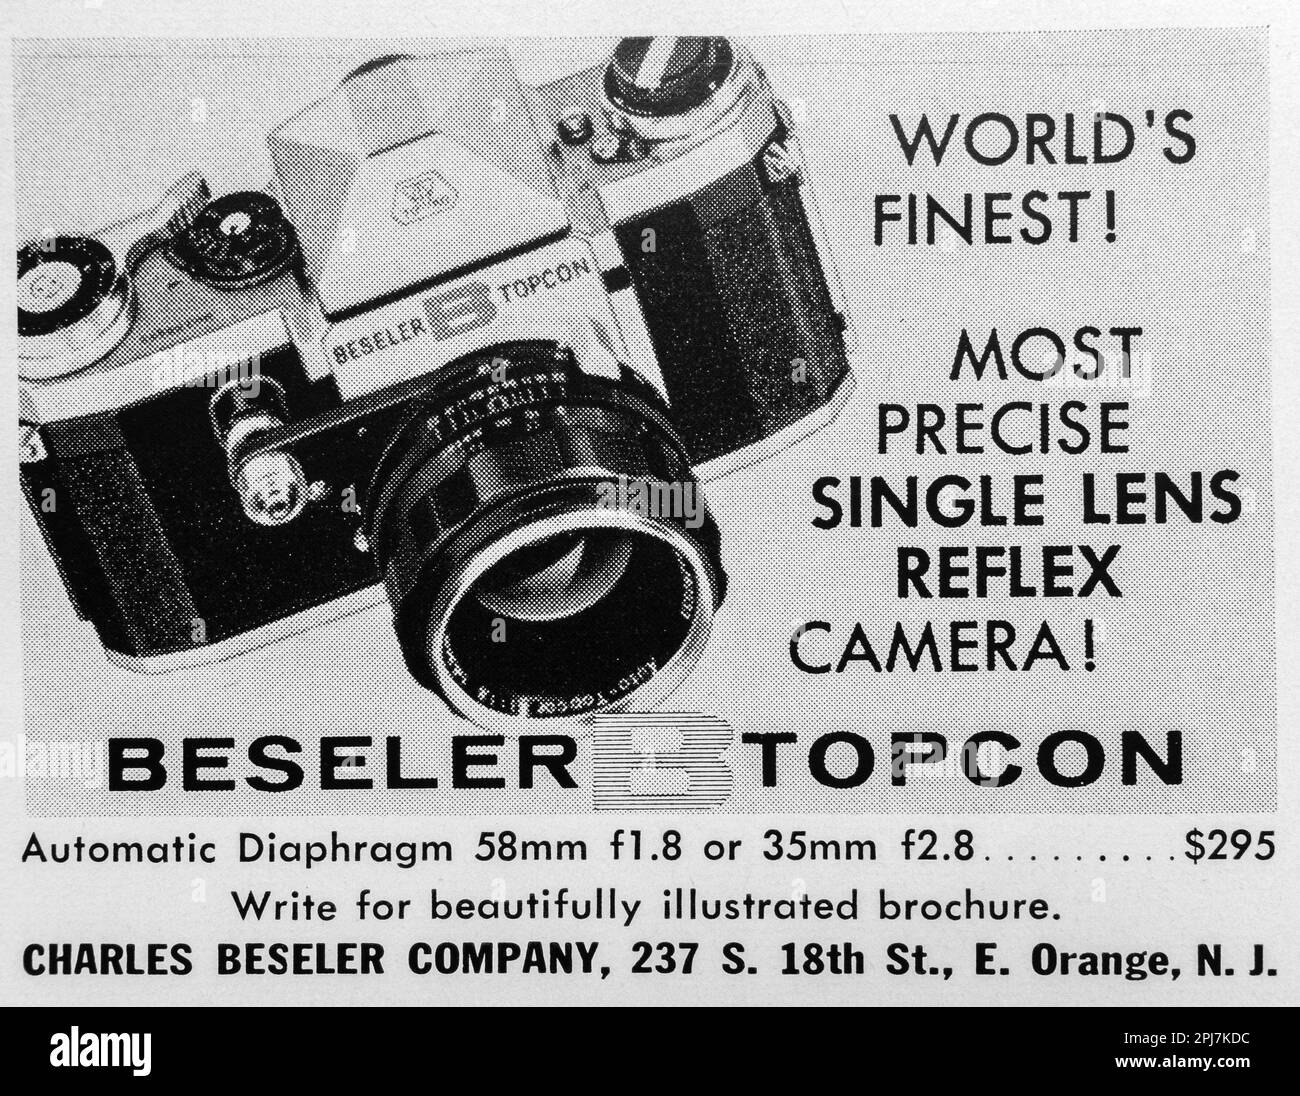 Beseler camera advert in a Natgeo magazine, August 1959 Stock Photo